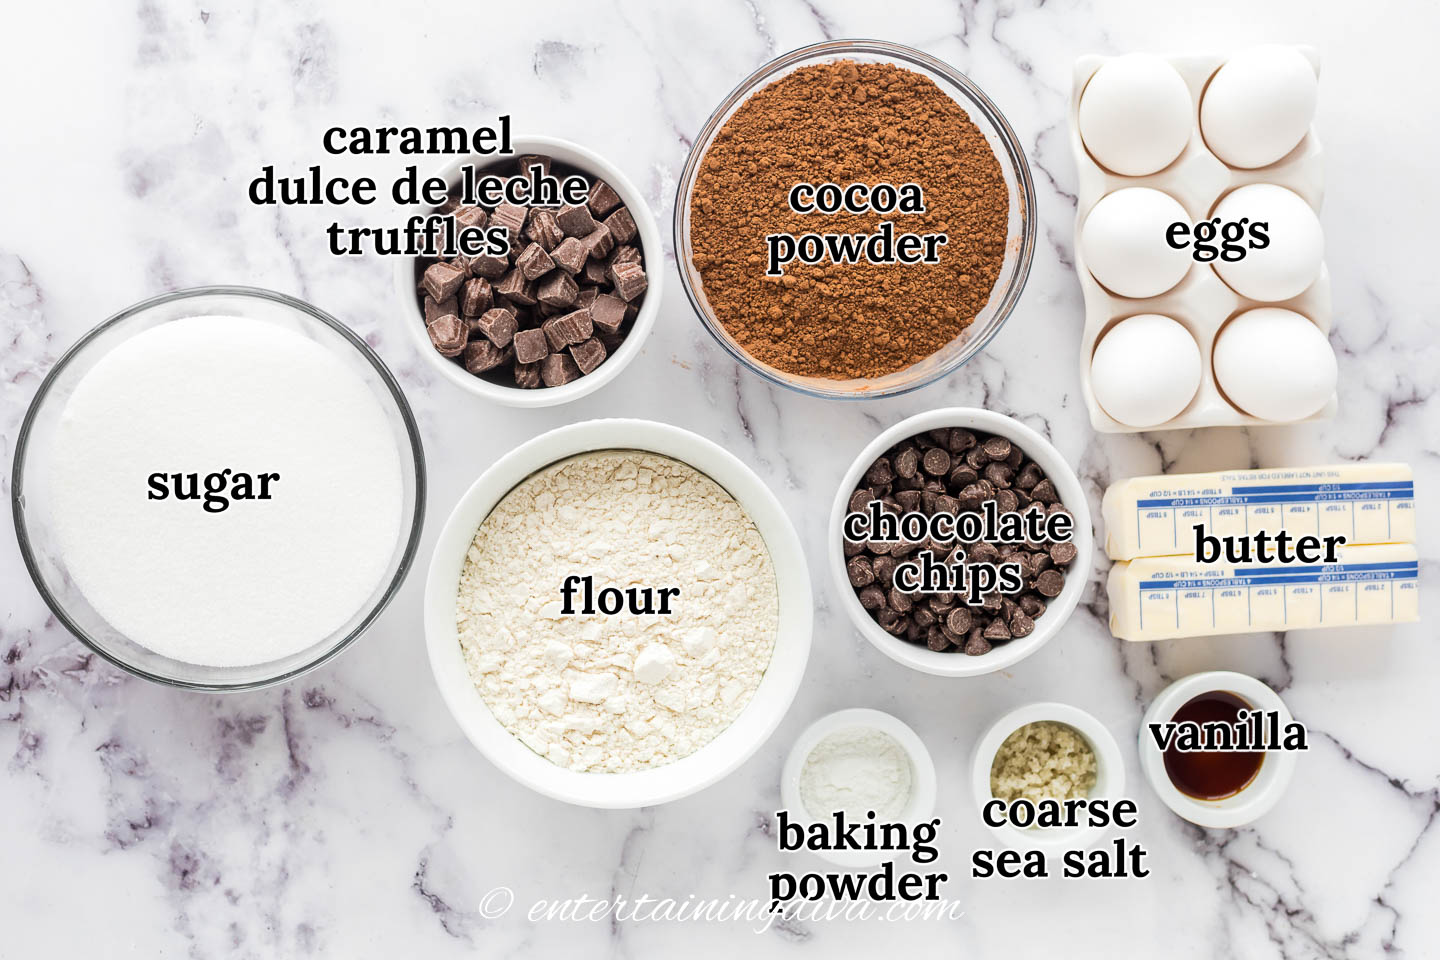 Ingredients for salted dulce de leche brownies - caramel dulce de leche truffles, cocoa powder, chocolate chips, eggs, butter, sugar, flour, baking powder, vanilla, coarse sea salt